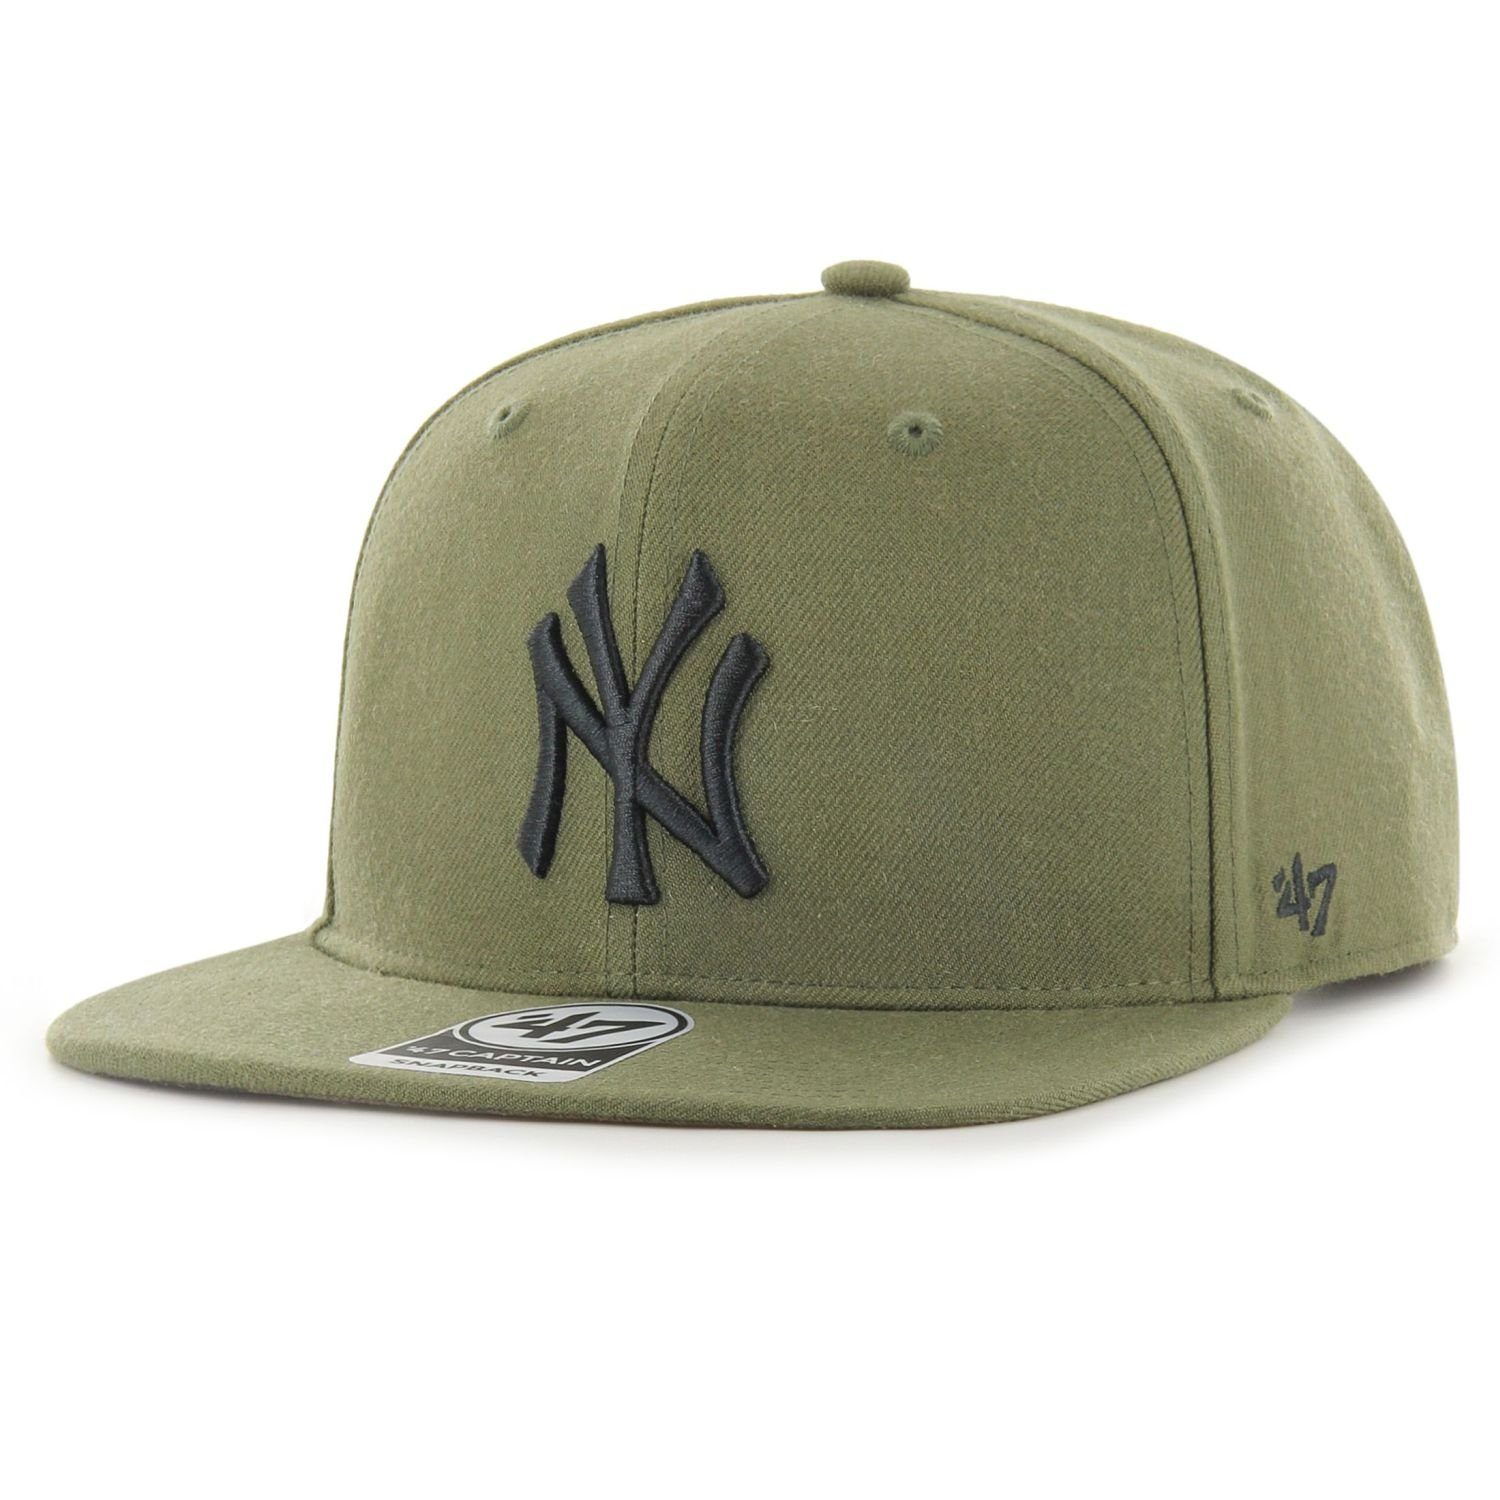 x27;47 Brand CAPTAIN York New Cap Snapback Yankees